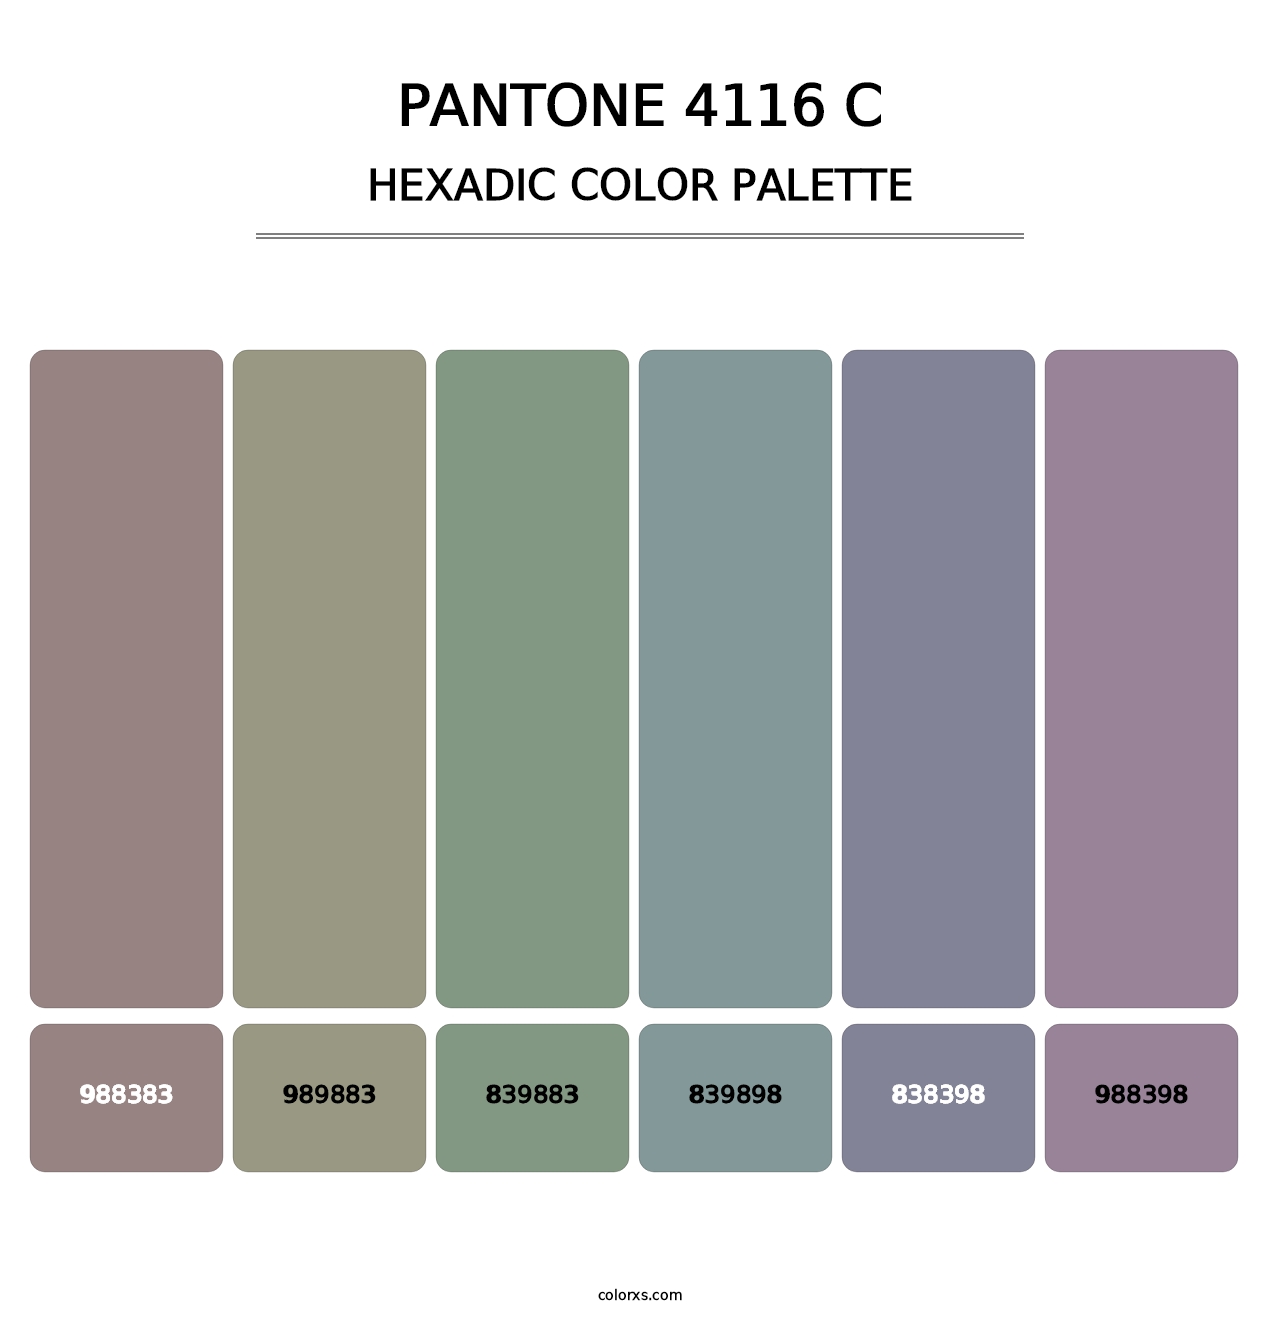 PANTONE 4116 C - Hexadic Color Palette